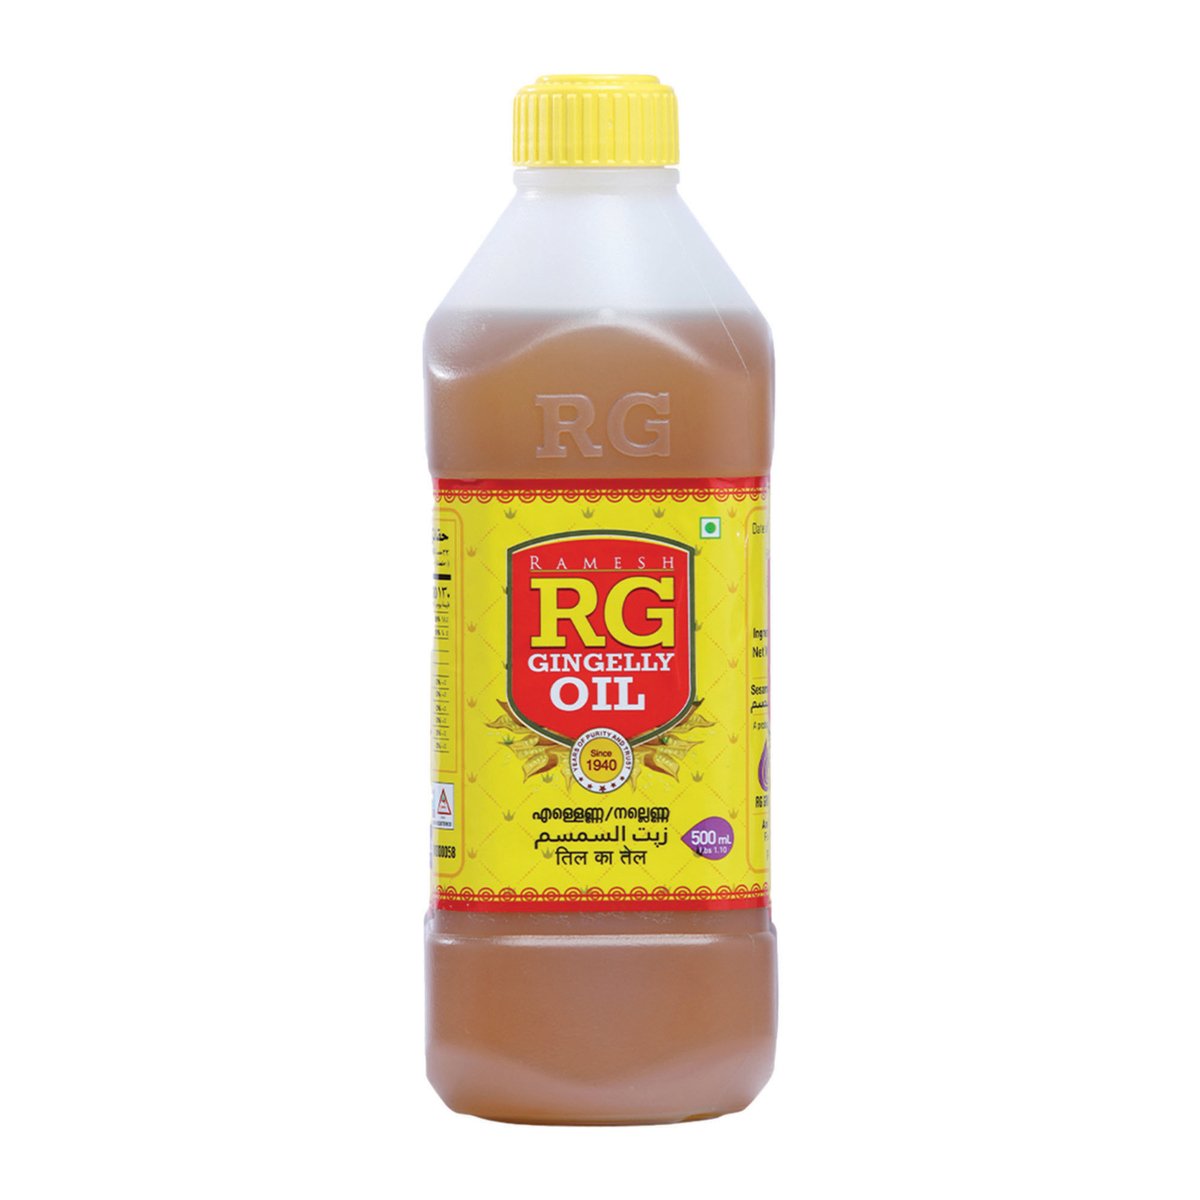 Rg Gingelly Oil 500 ml